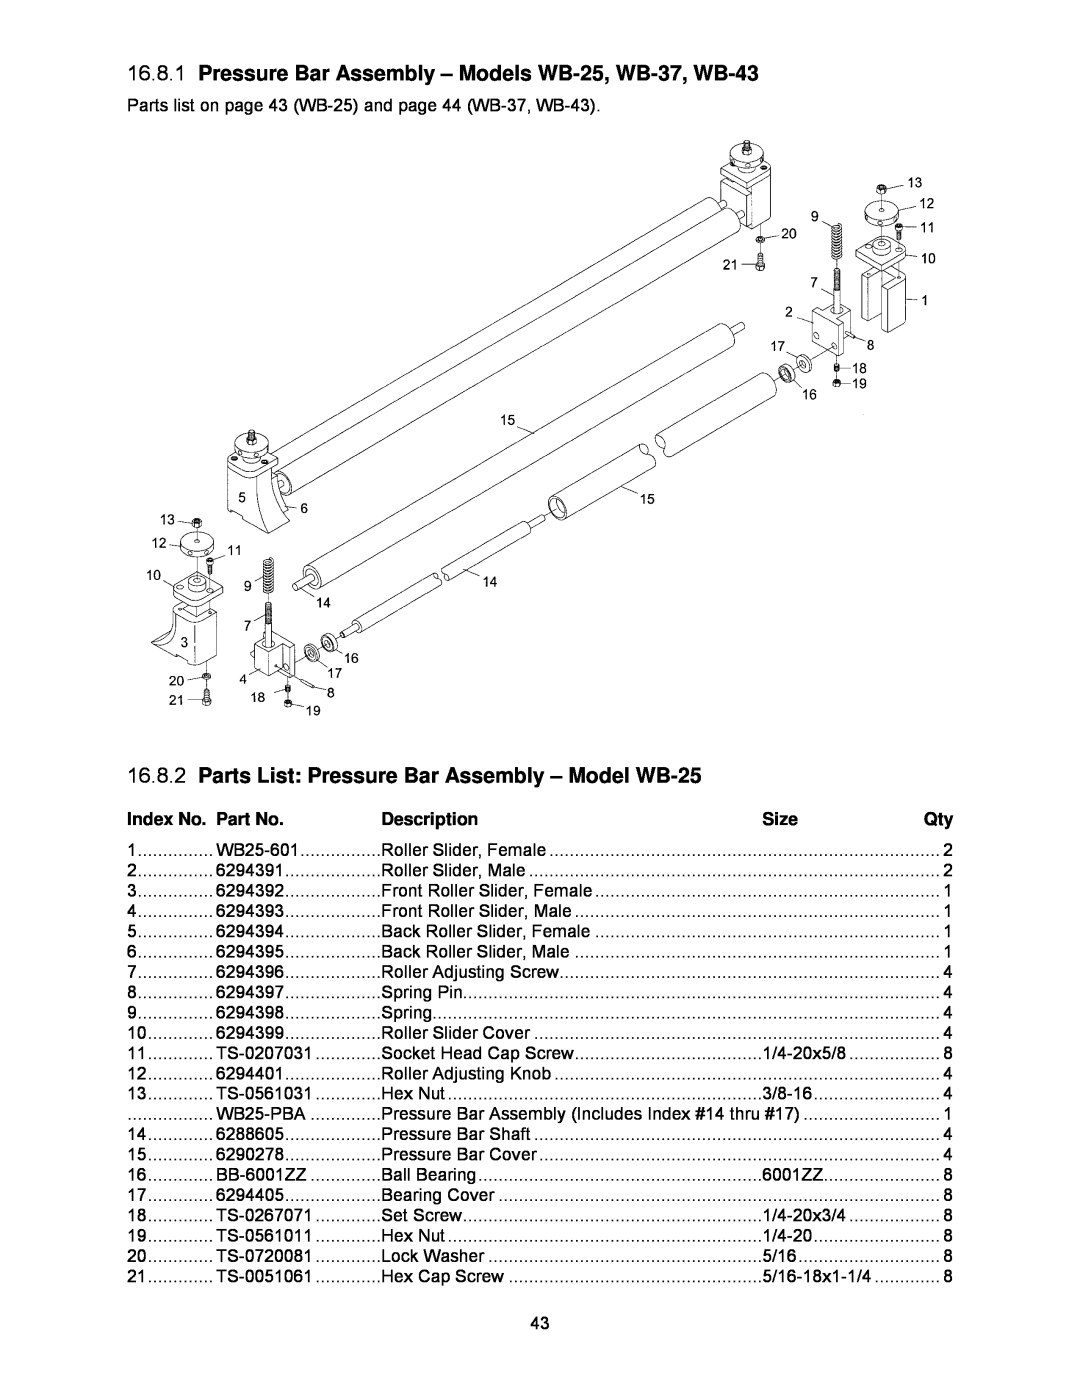 Powermatic Pressure Bar Assembly - Models WB-25, WB-37, WB-43, Parts List Pressure Bar Assembly - Model WB-25, Size 